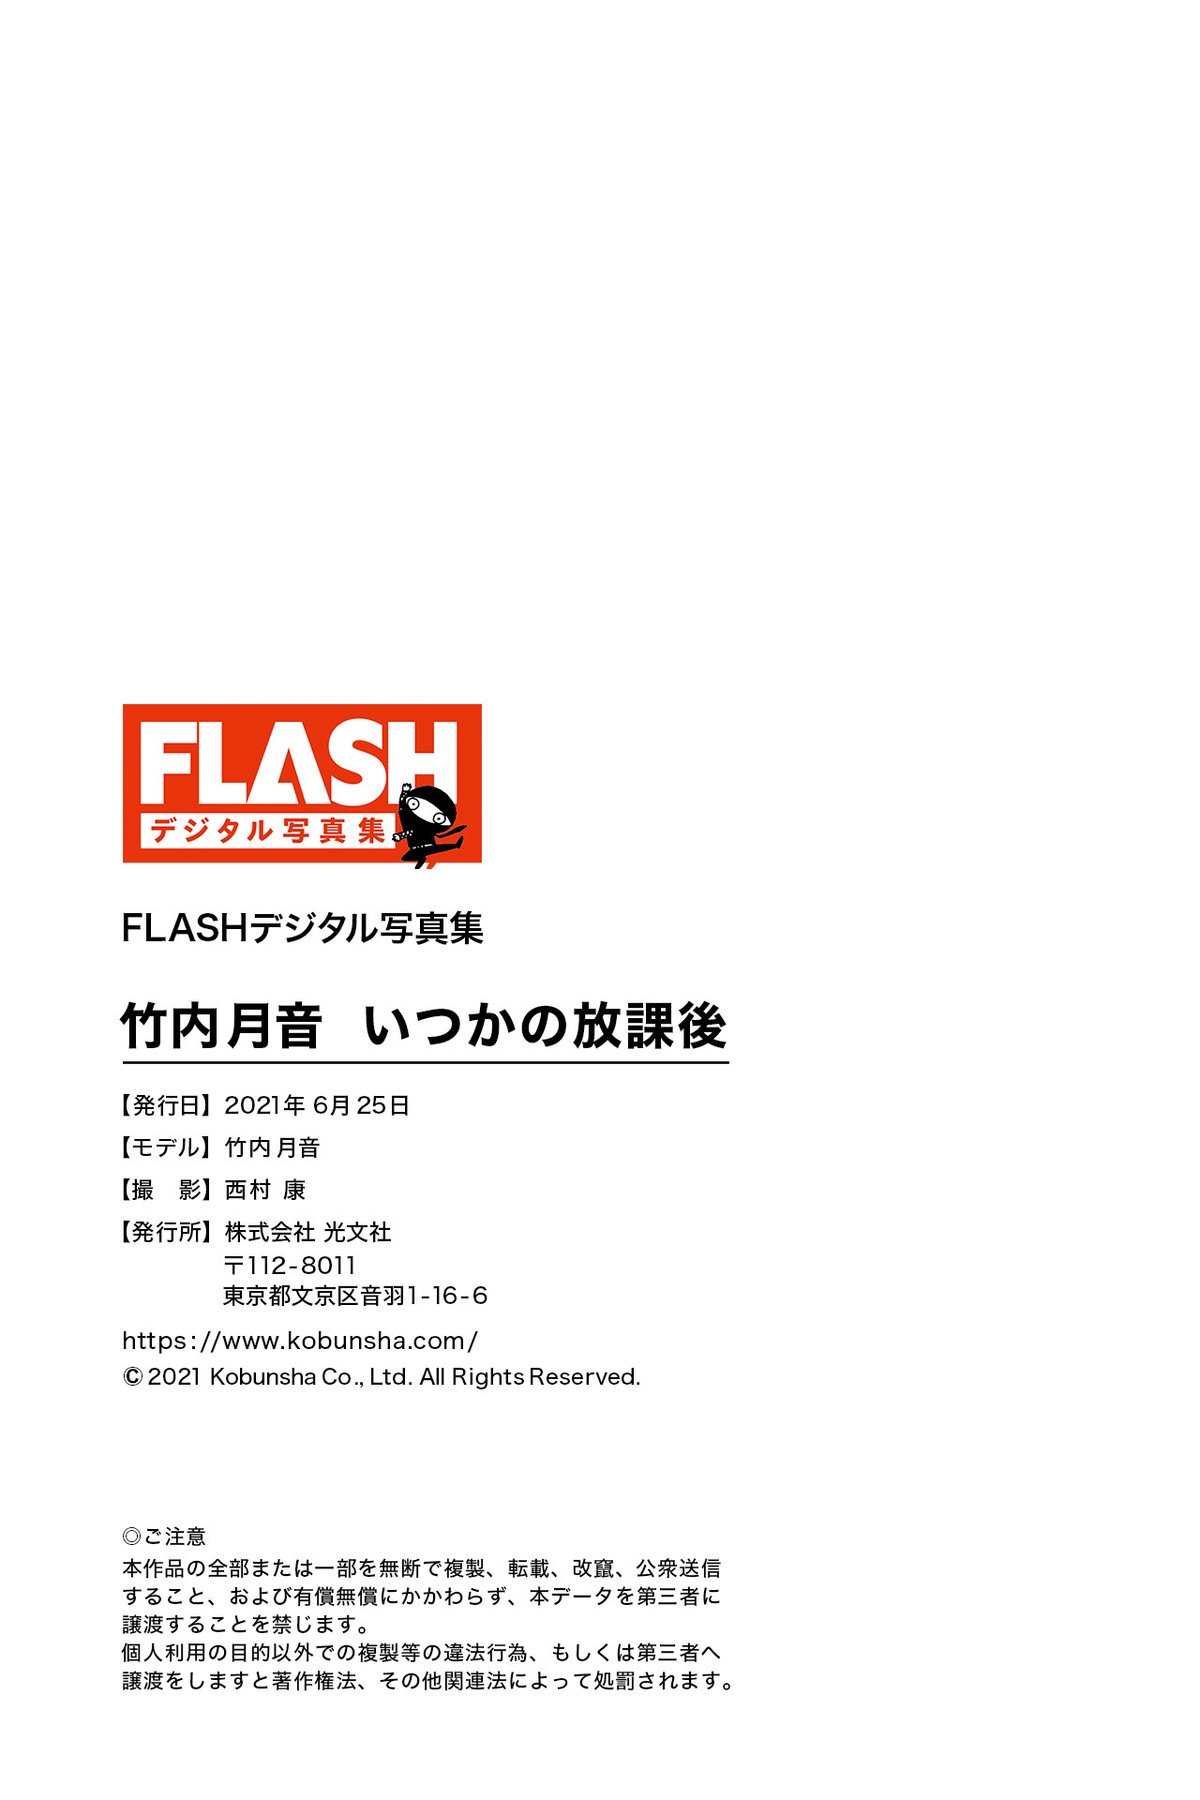 FLASH Photobook 2021 06 25 Tsukine Takeuchi 竹内月音 Someday After School 0076 7221968112.jpg